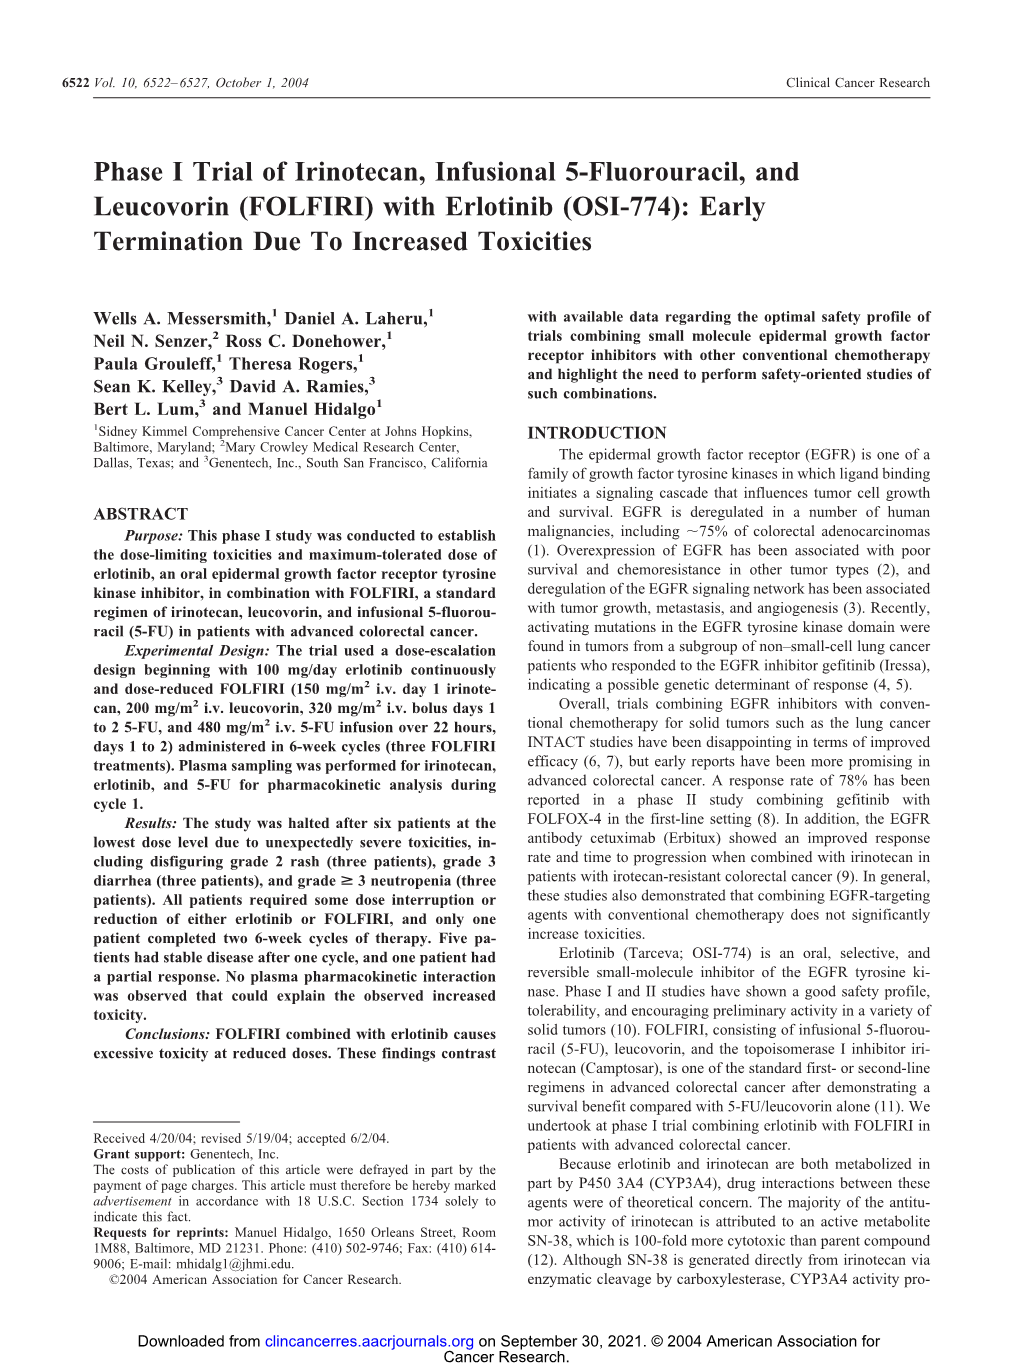 FOLFIRI) with Erlotinib (OSI-774): Early Termination Due to Increased Toxicities